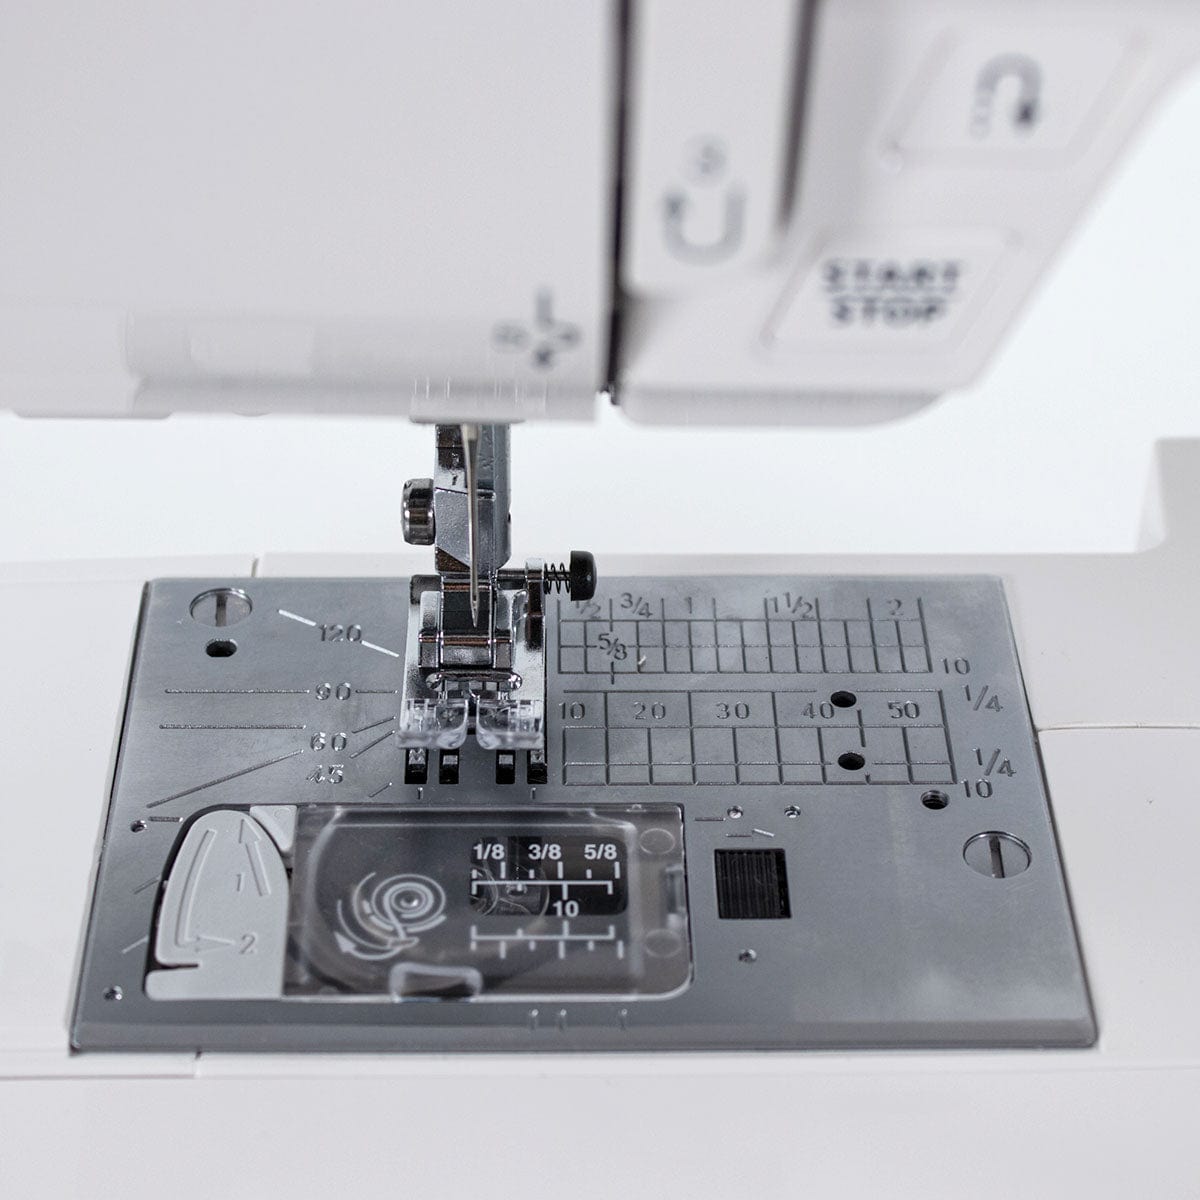 Janome M200QDC Sewing Machine £50 Off RRP + Free Bias Binding Foot Worth £21